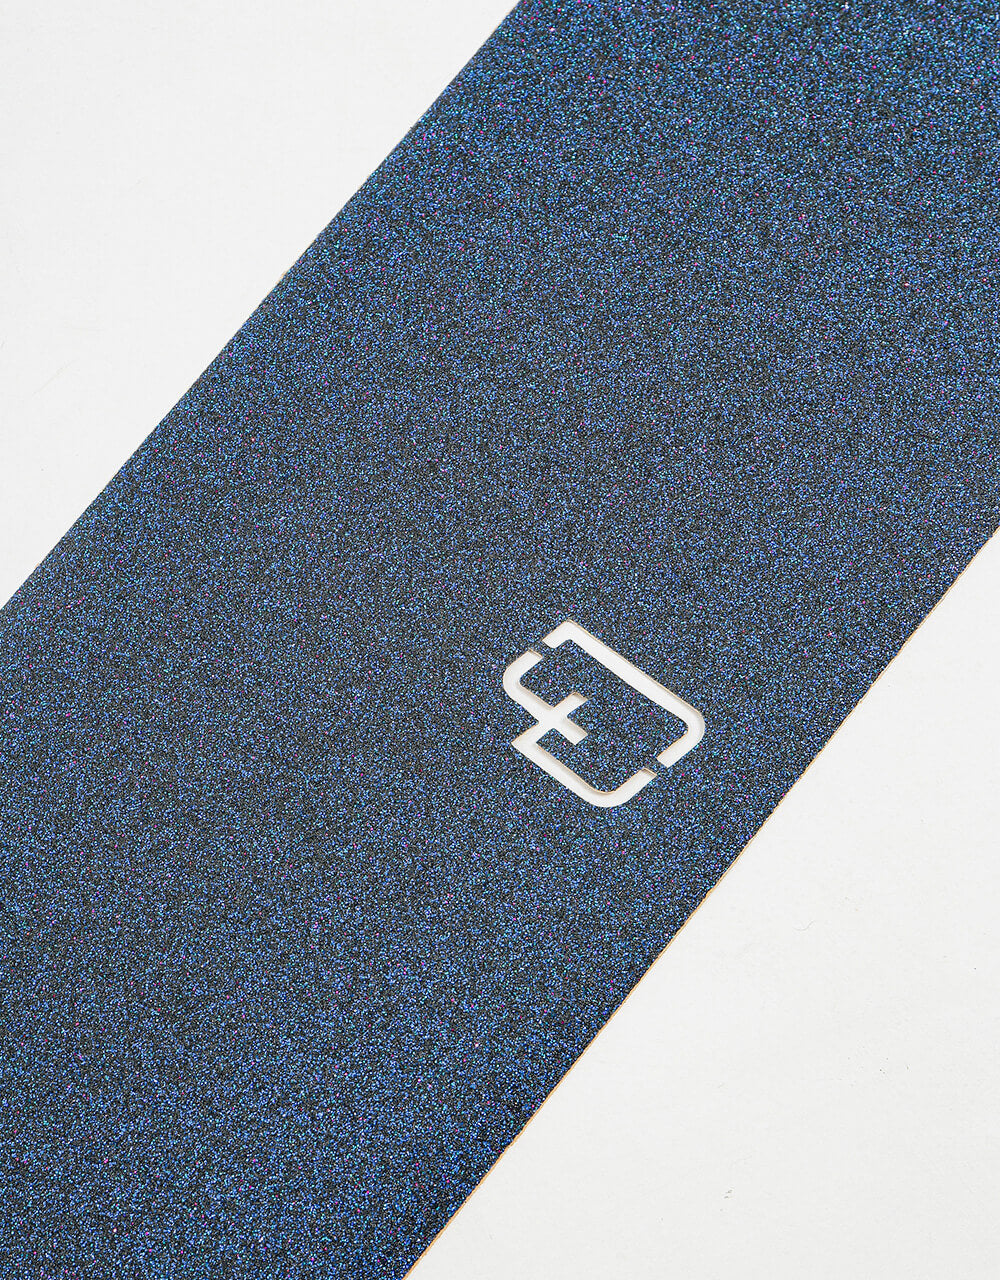 Four.D Die Cut Logo Shiny 9" Grip Tape Sheet